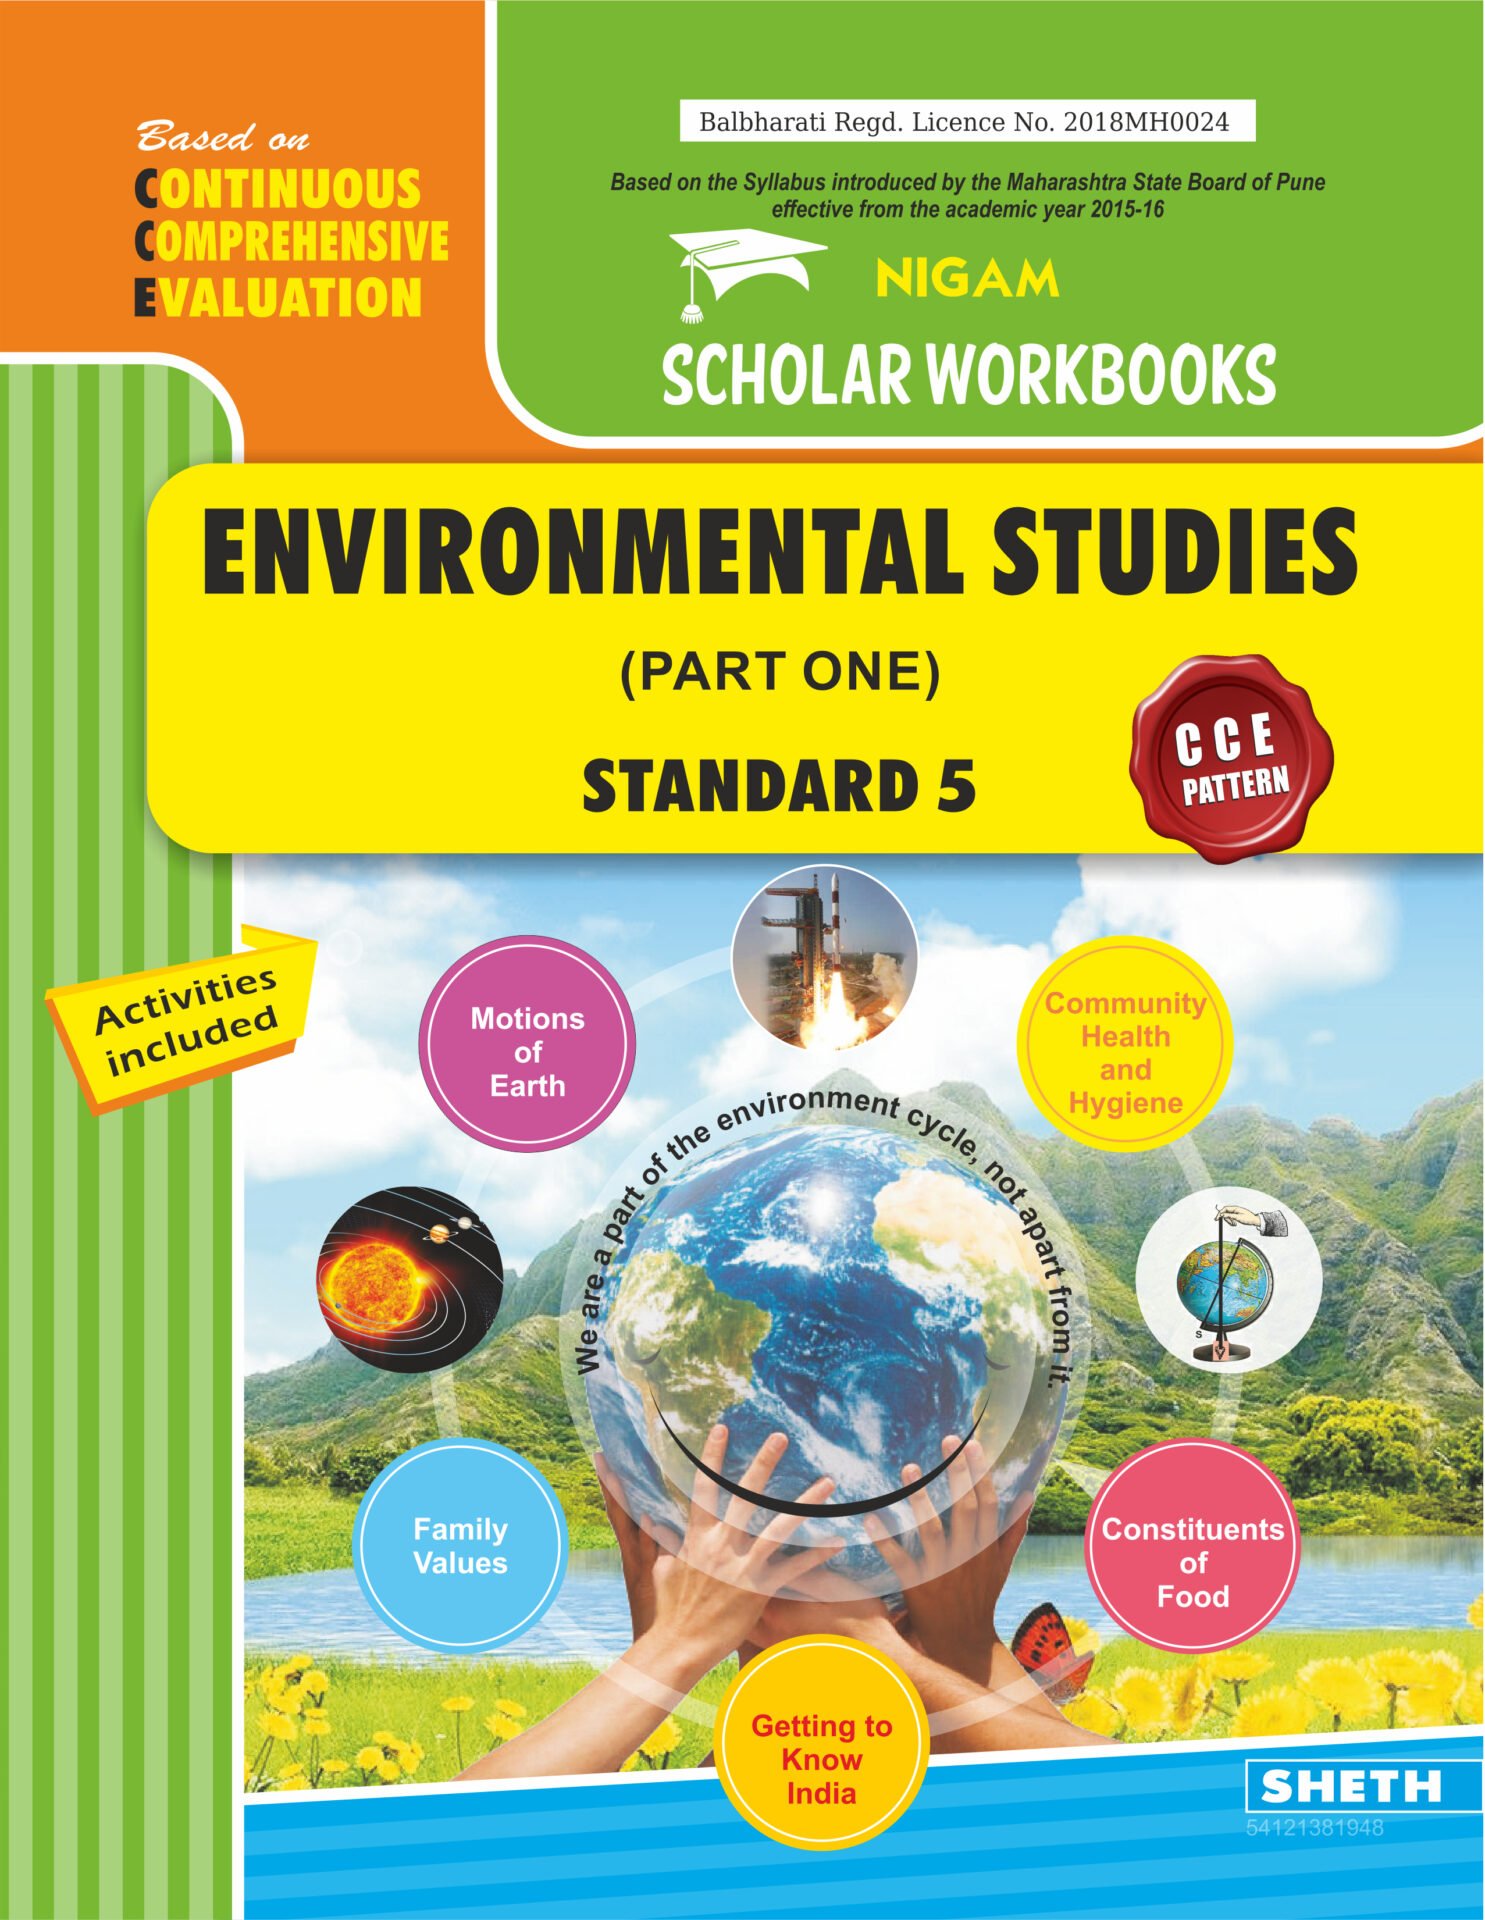 CCE Pattern Nigam Scholar Workbooks Environmental Studies Part 1 Standard 5 1